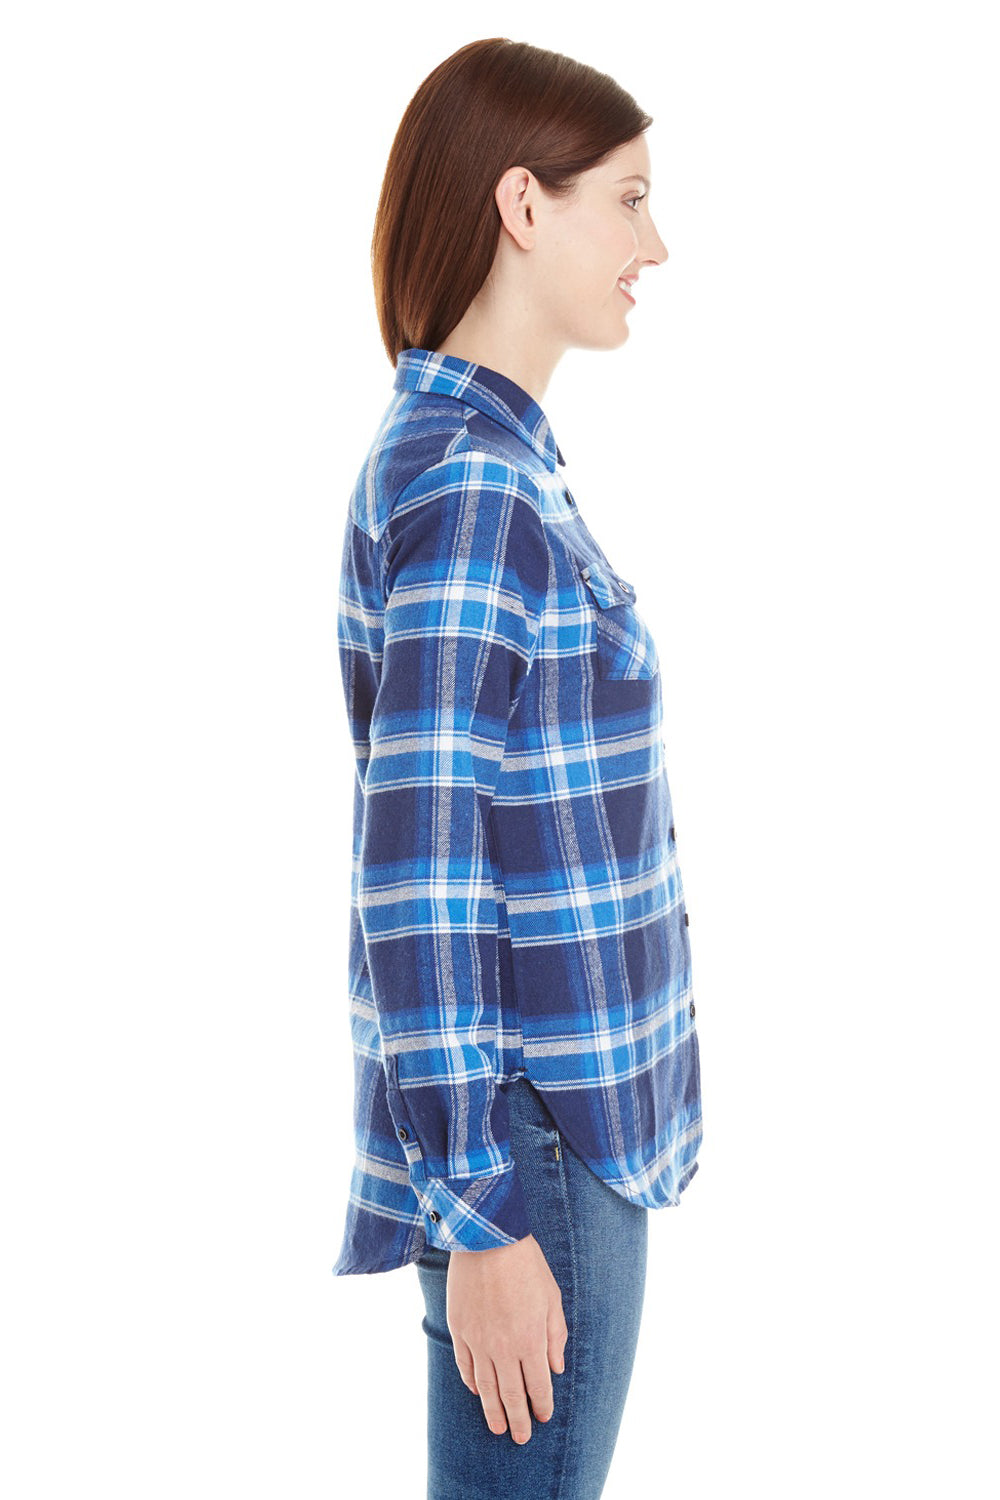 Burnside B5210 Womens Boyfriend Flannel Long Sleeve Button Down Shirt w/ Double Pockets Blue/White Side